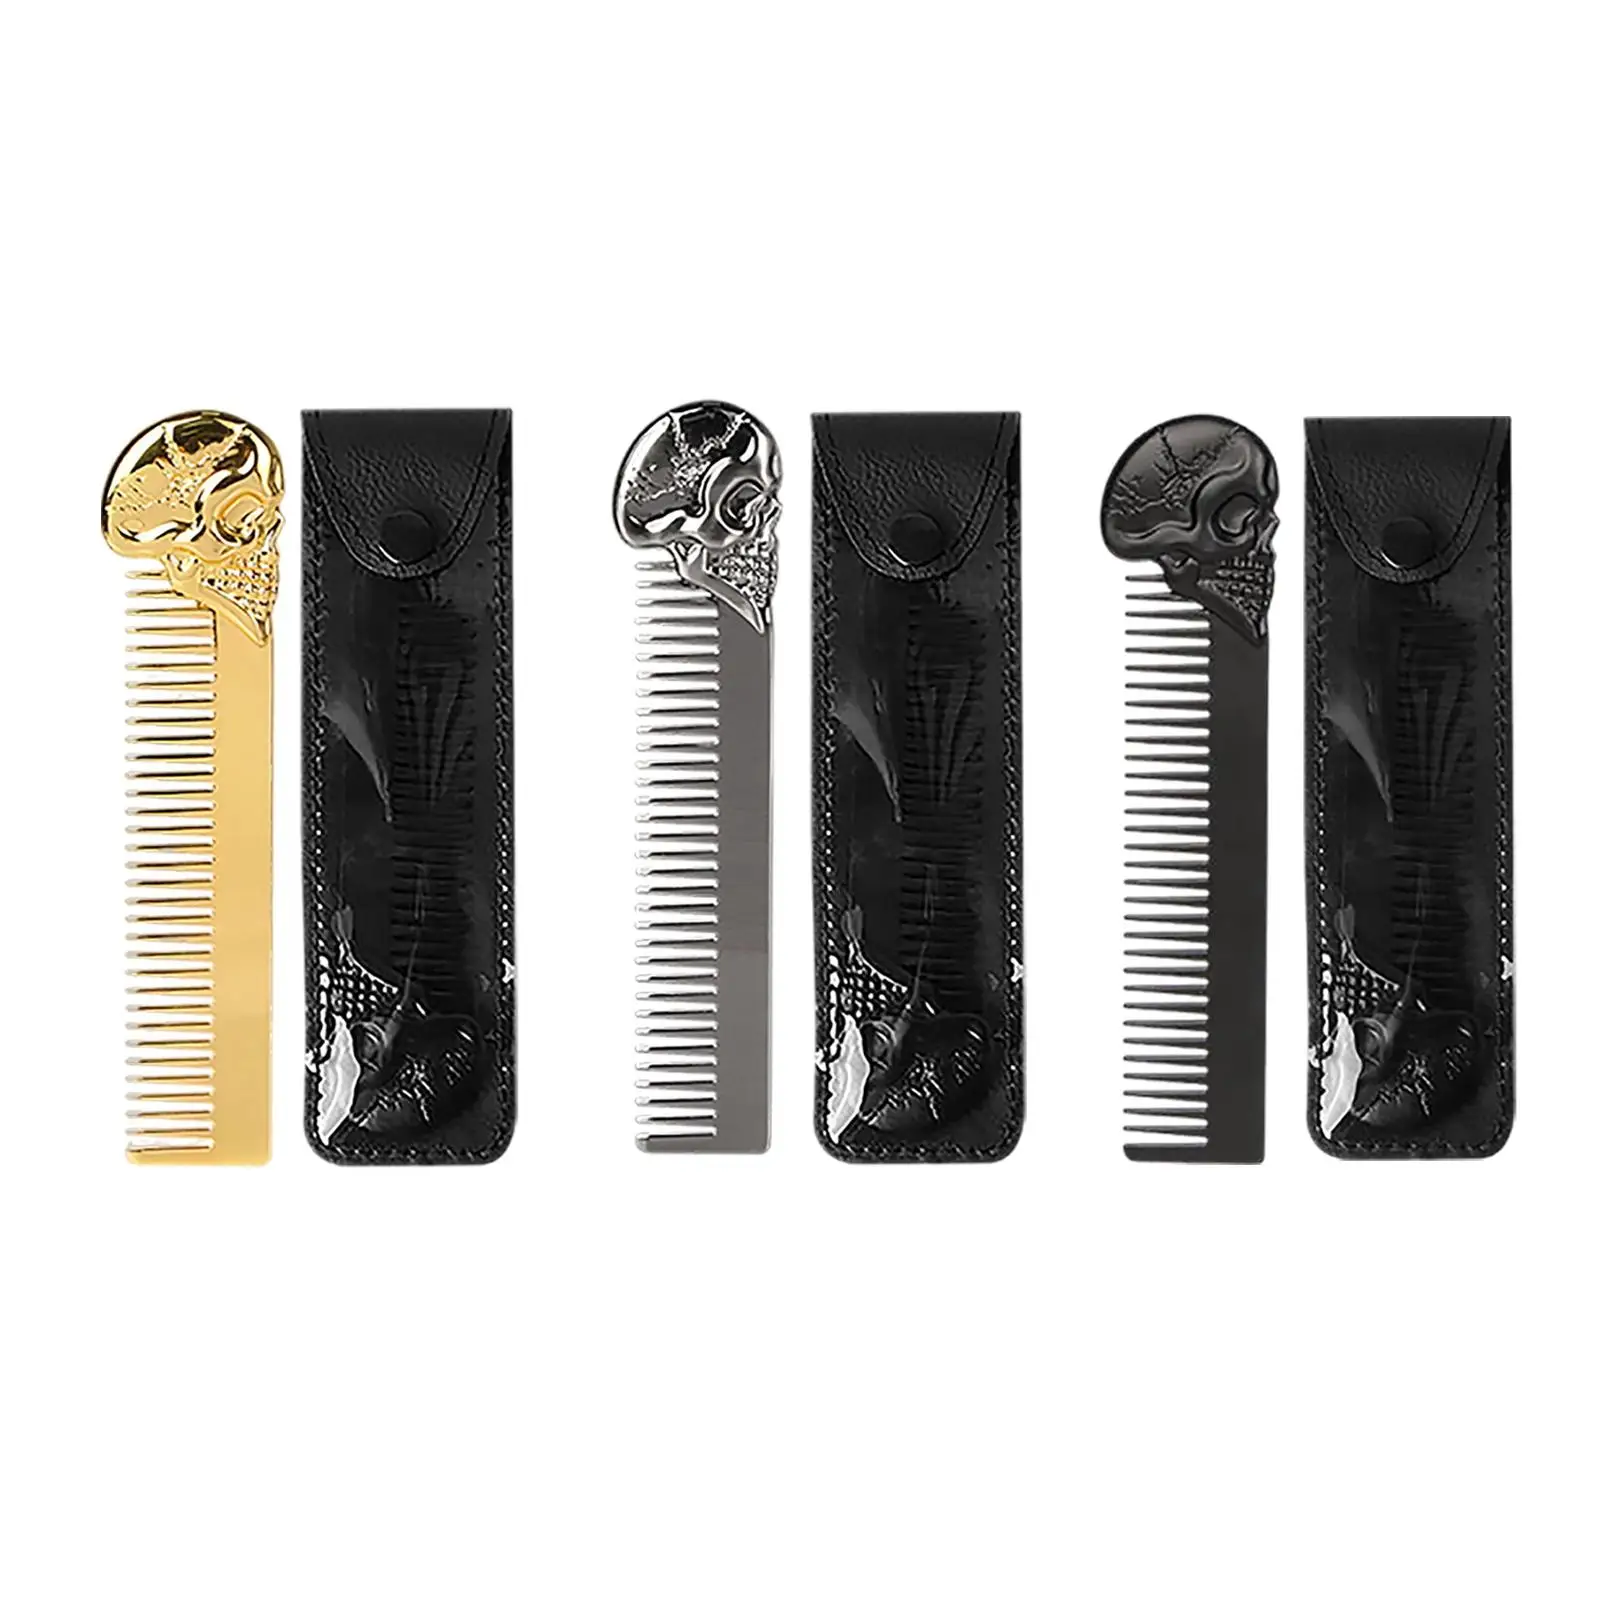   Comb for Men Fine Beard Shaping Alloy Trim Tool Barber